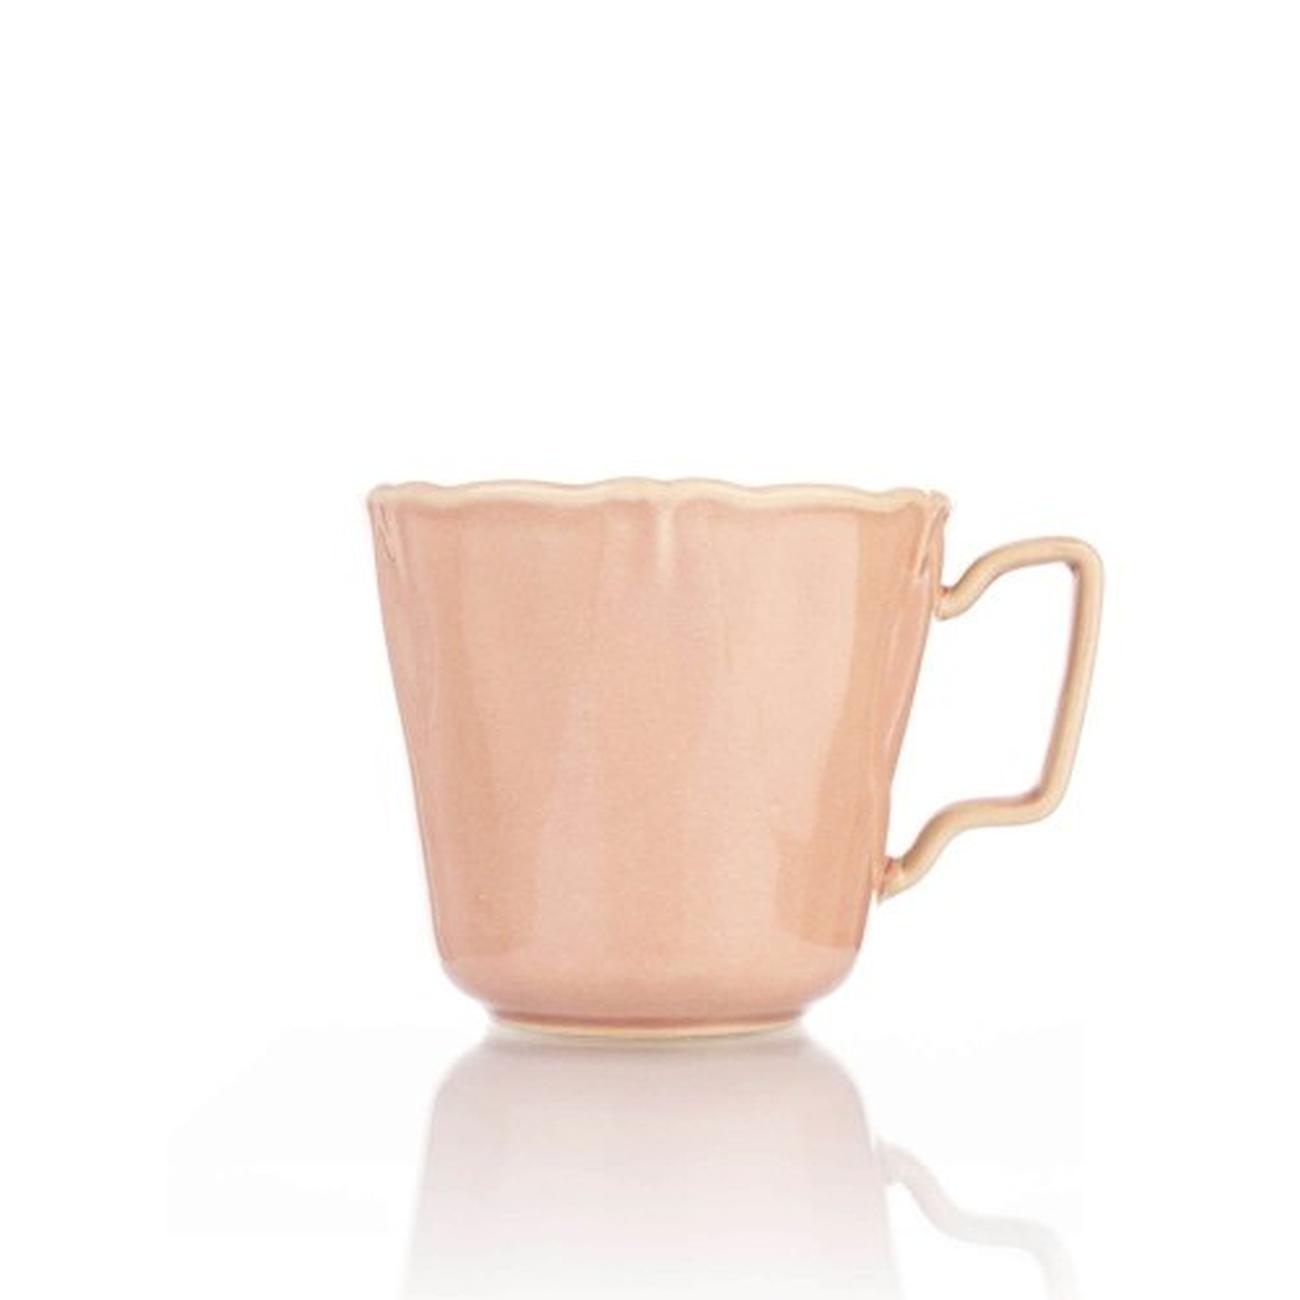 siip-pink-reactive-glaze-scalloped-edge-mug - Siip Reactive Glaze Scalloped Edge Mug Pink